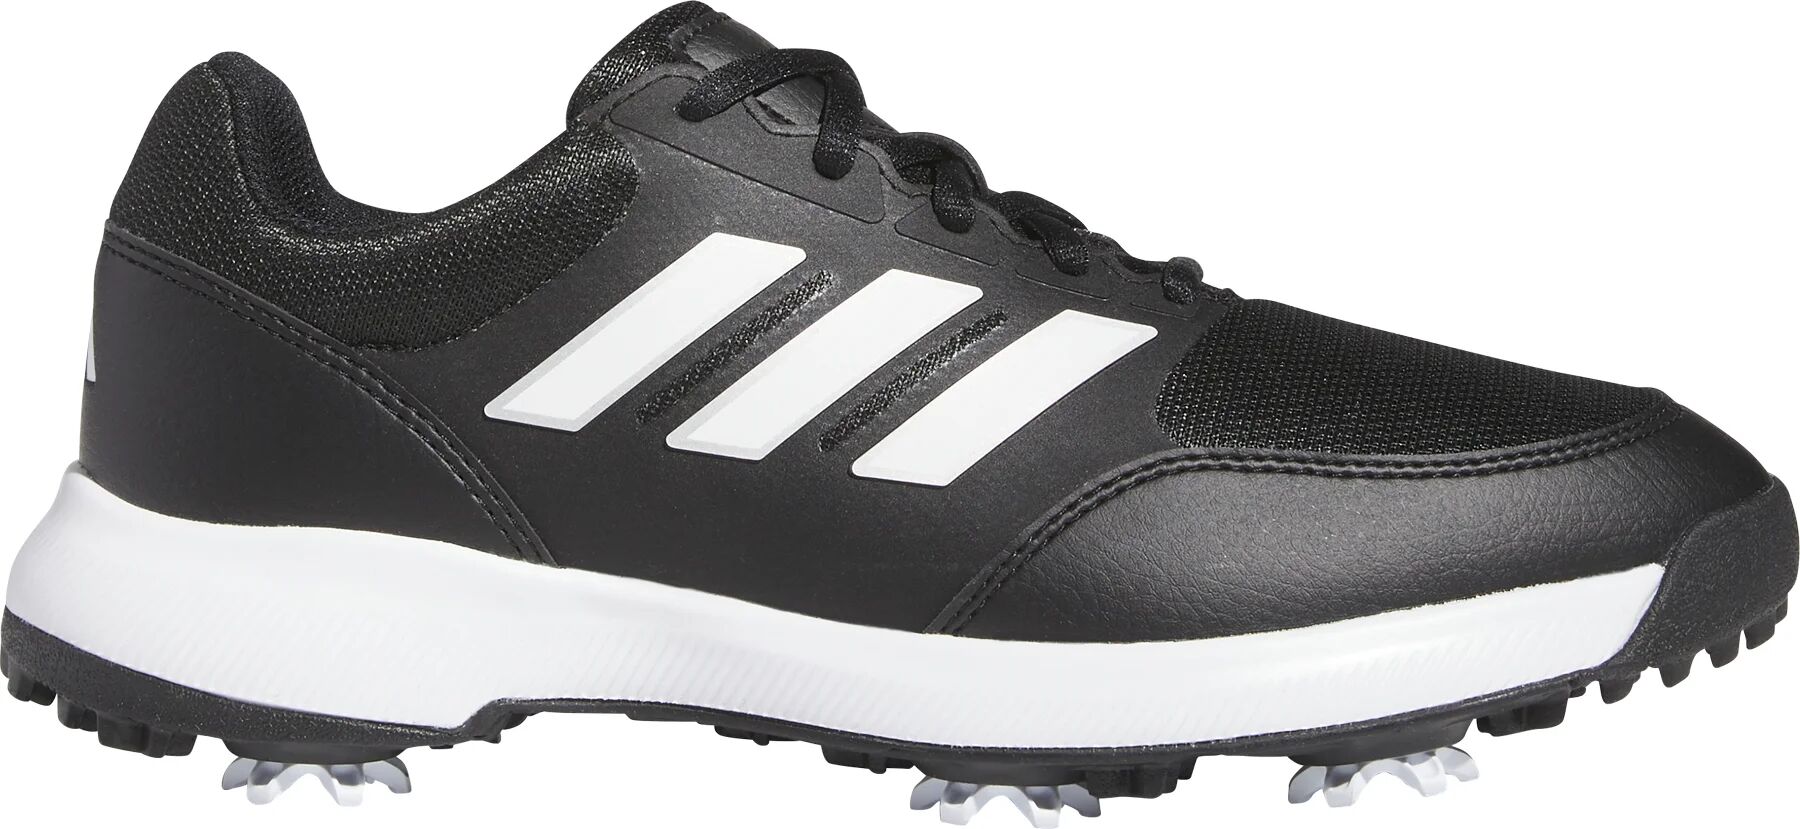 adidas Womens Tech Response 3.0 Golf Shoes - Core Black/Cloud White/Silver Metallic - 6 - MEDIUM